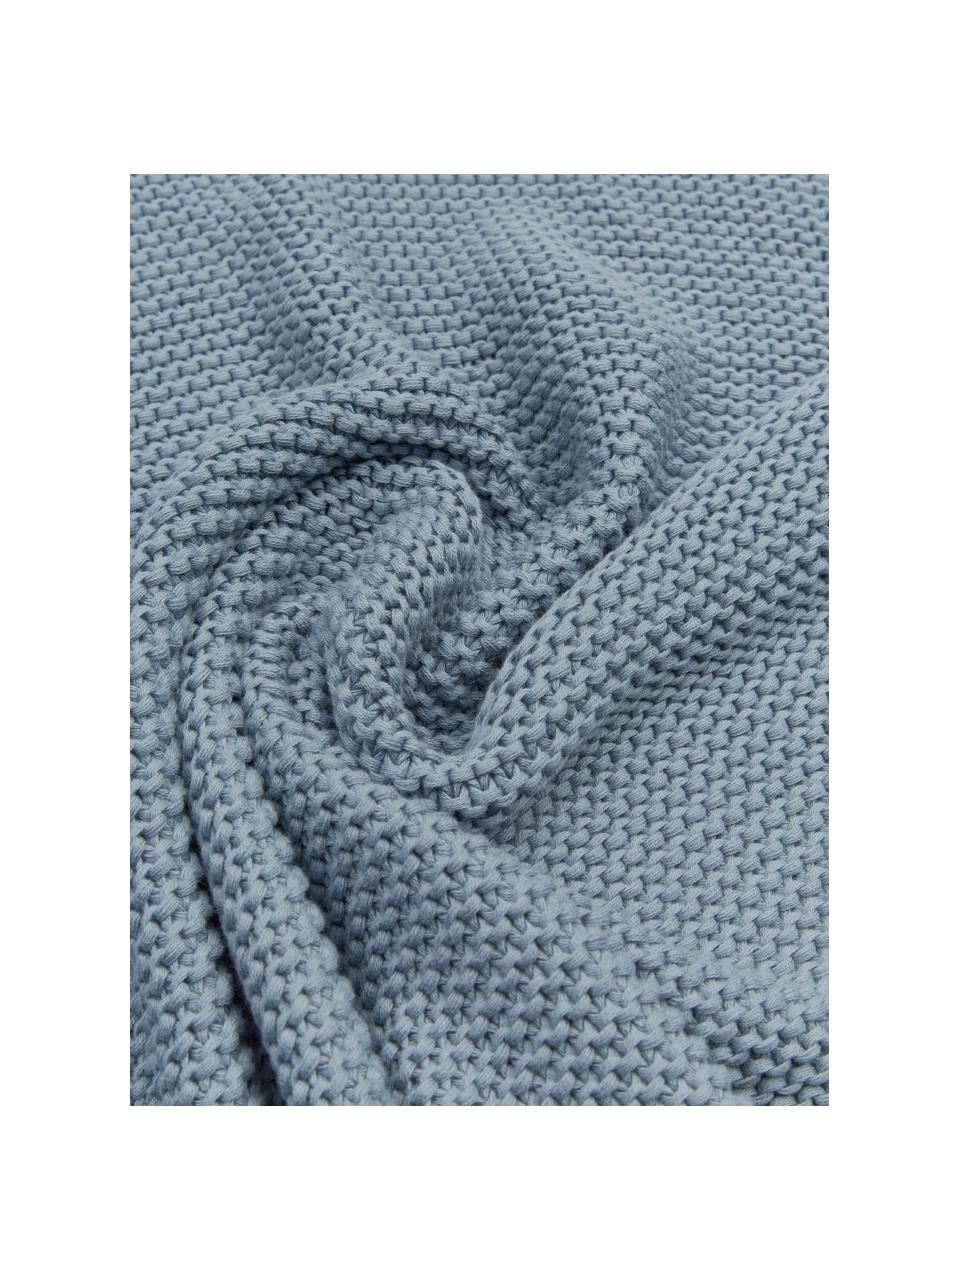 Strickdecke Adalyn aus Bio-Baumwolle in Blau, 100% Bio-Baumwolle, GOTS-zertifiziert, Blau, B 150 x L 200 cm